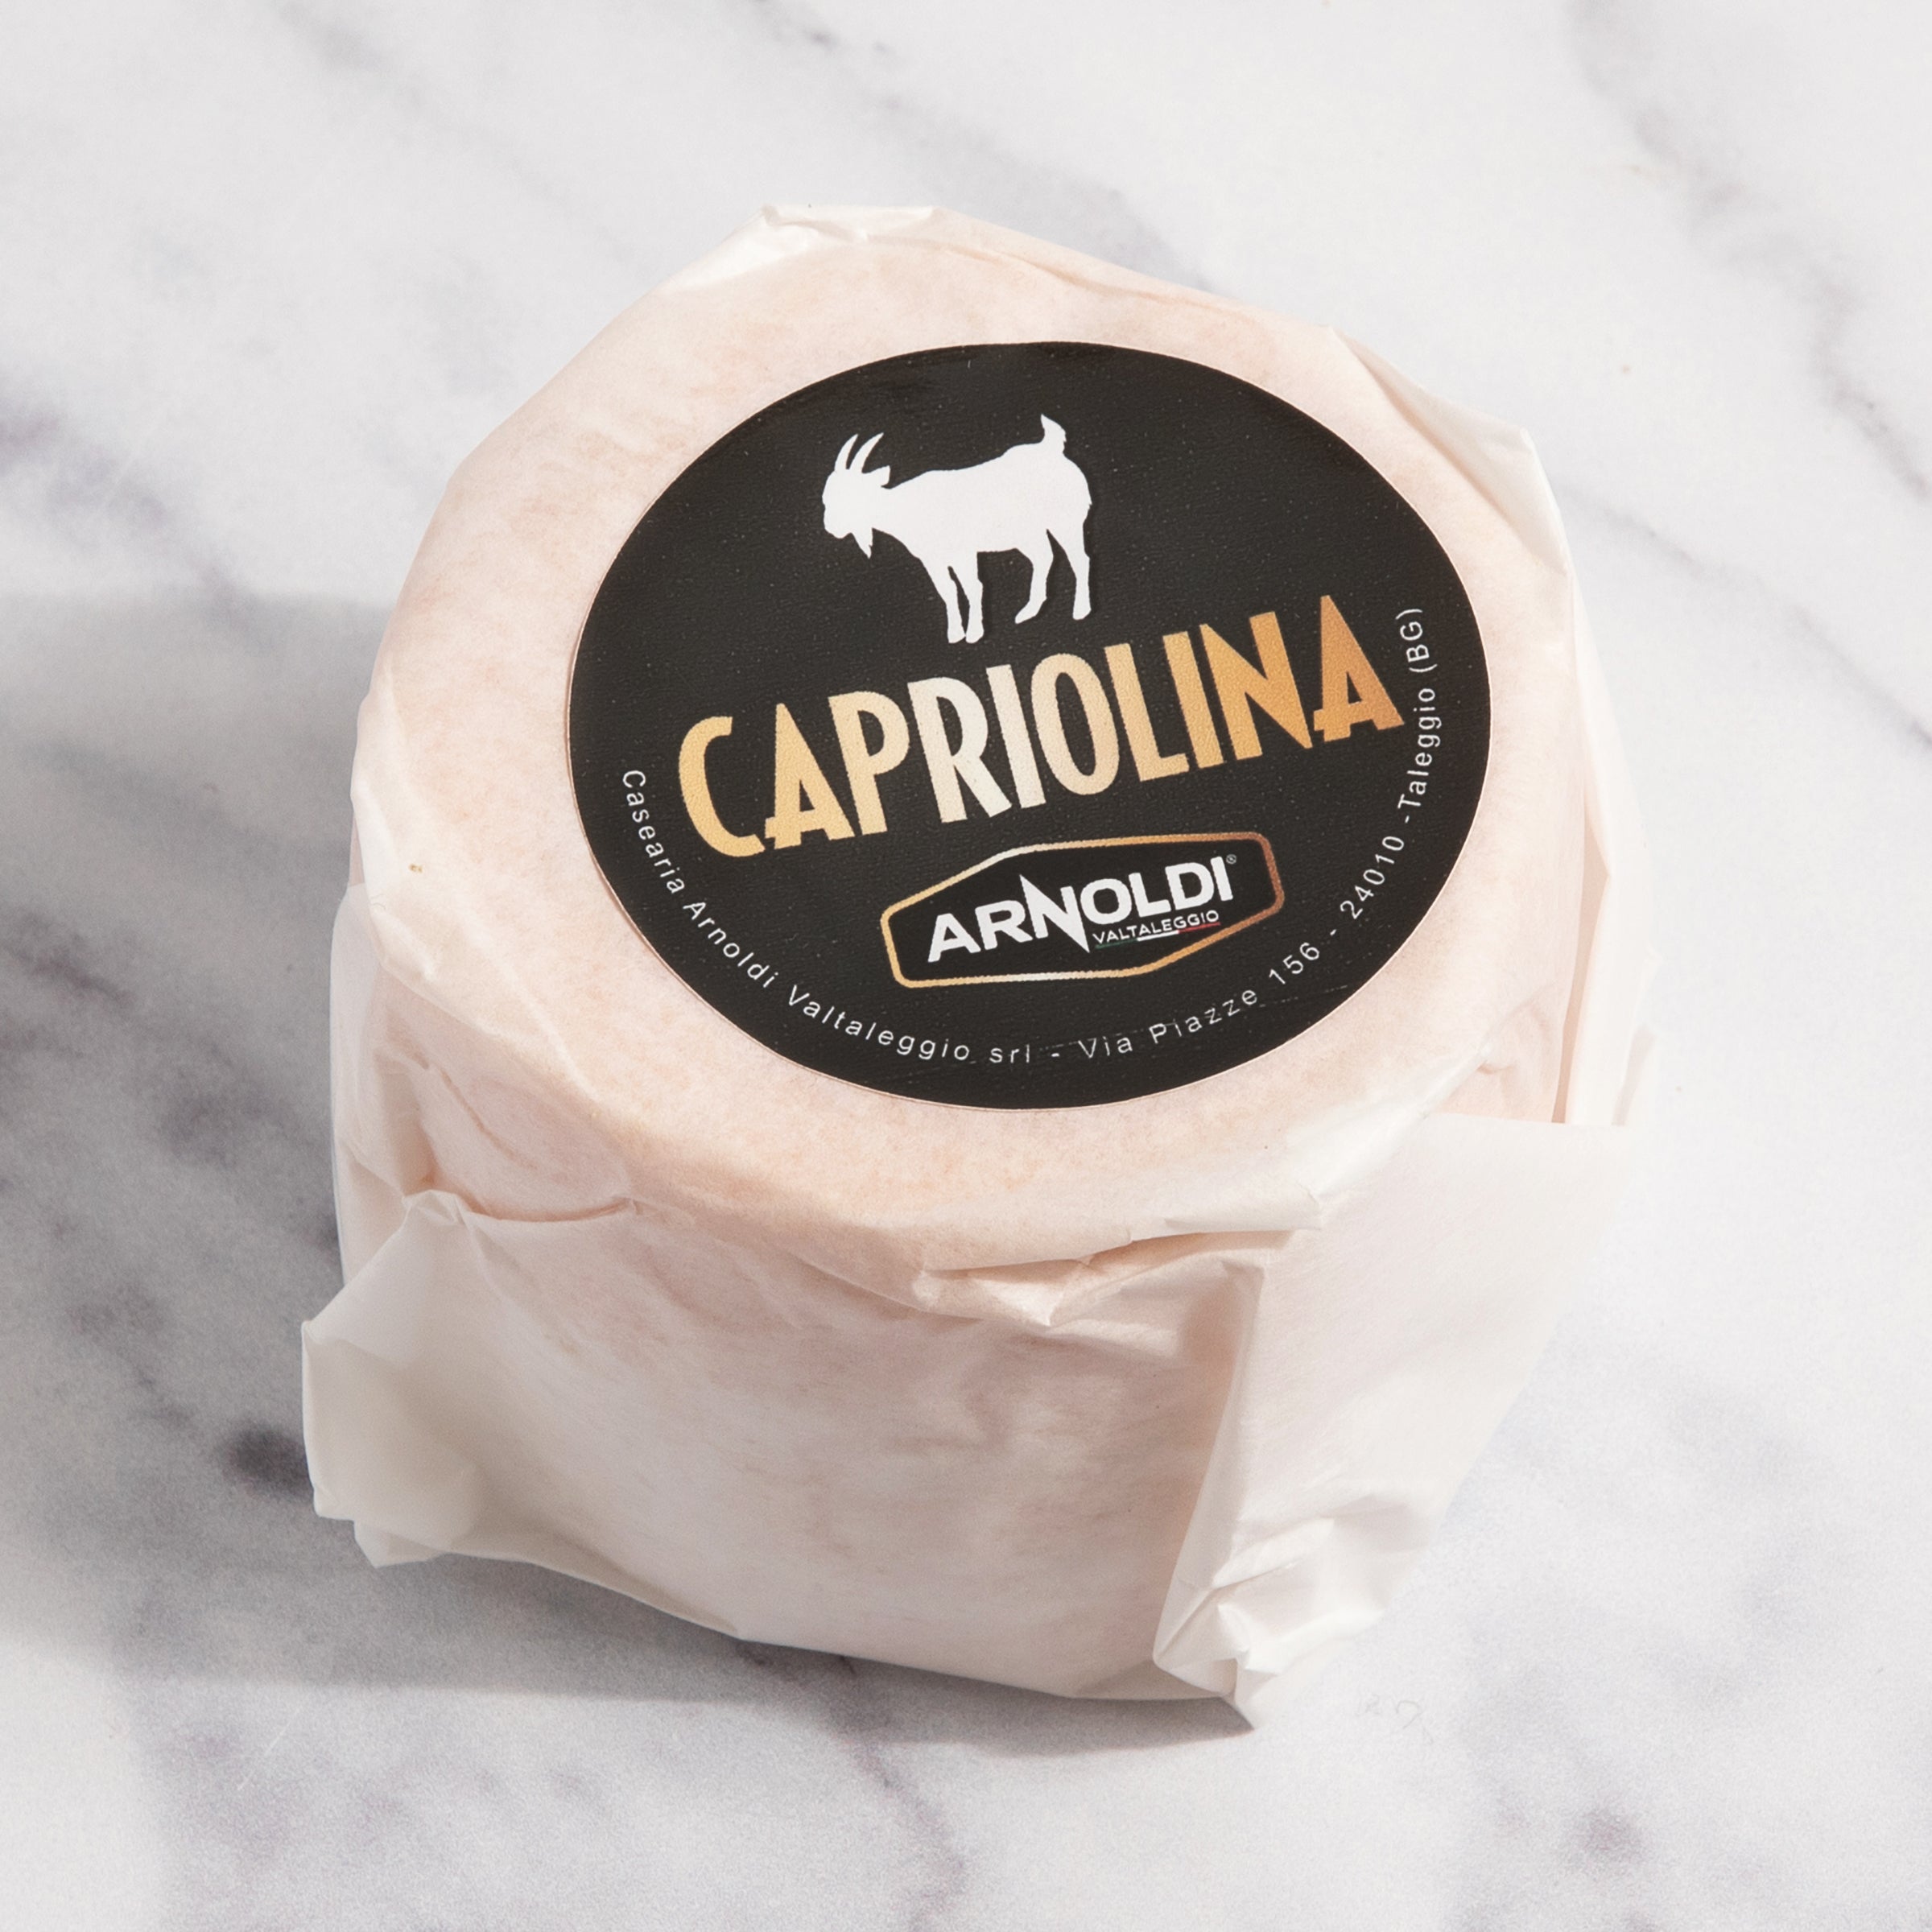 Capriolina Italian Washed Rind Goat's Milk Cheese – igourmet